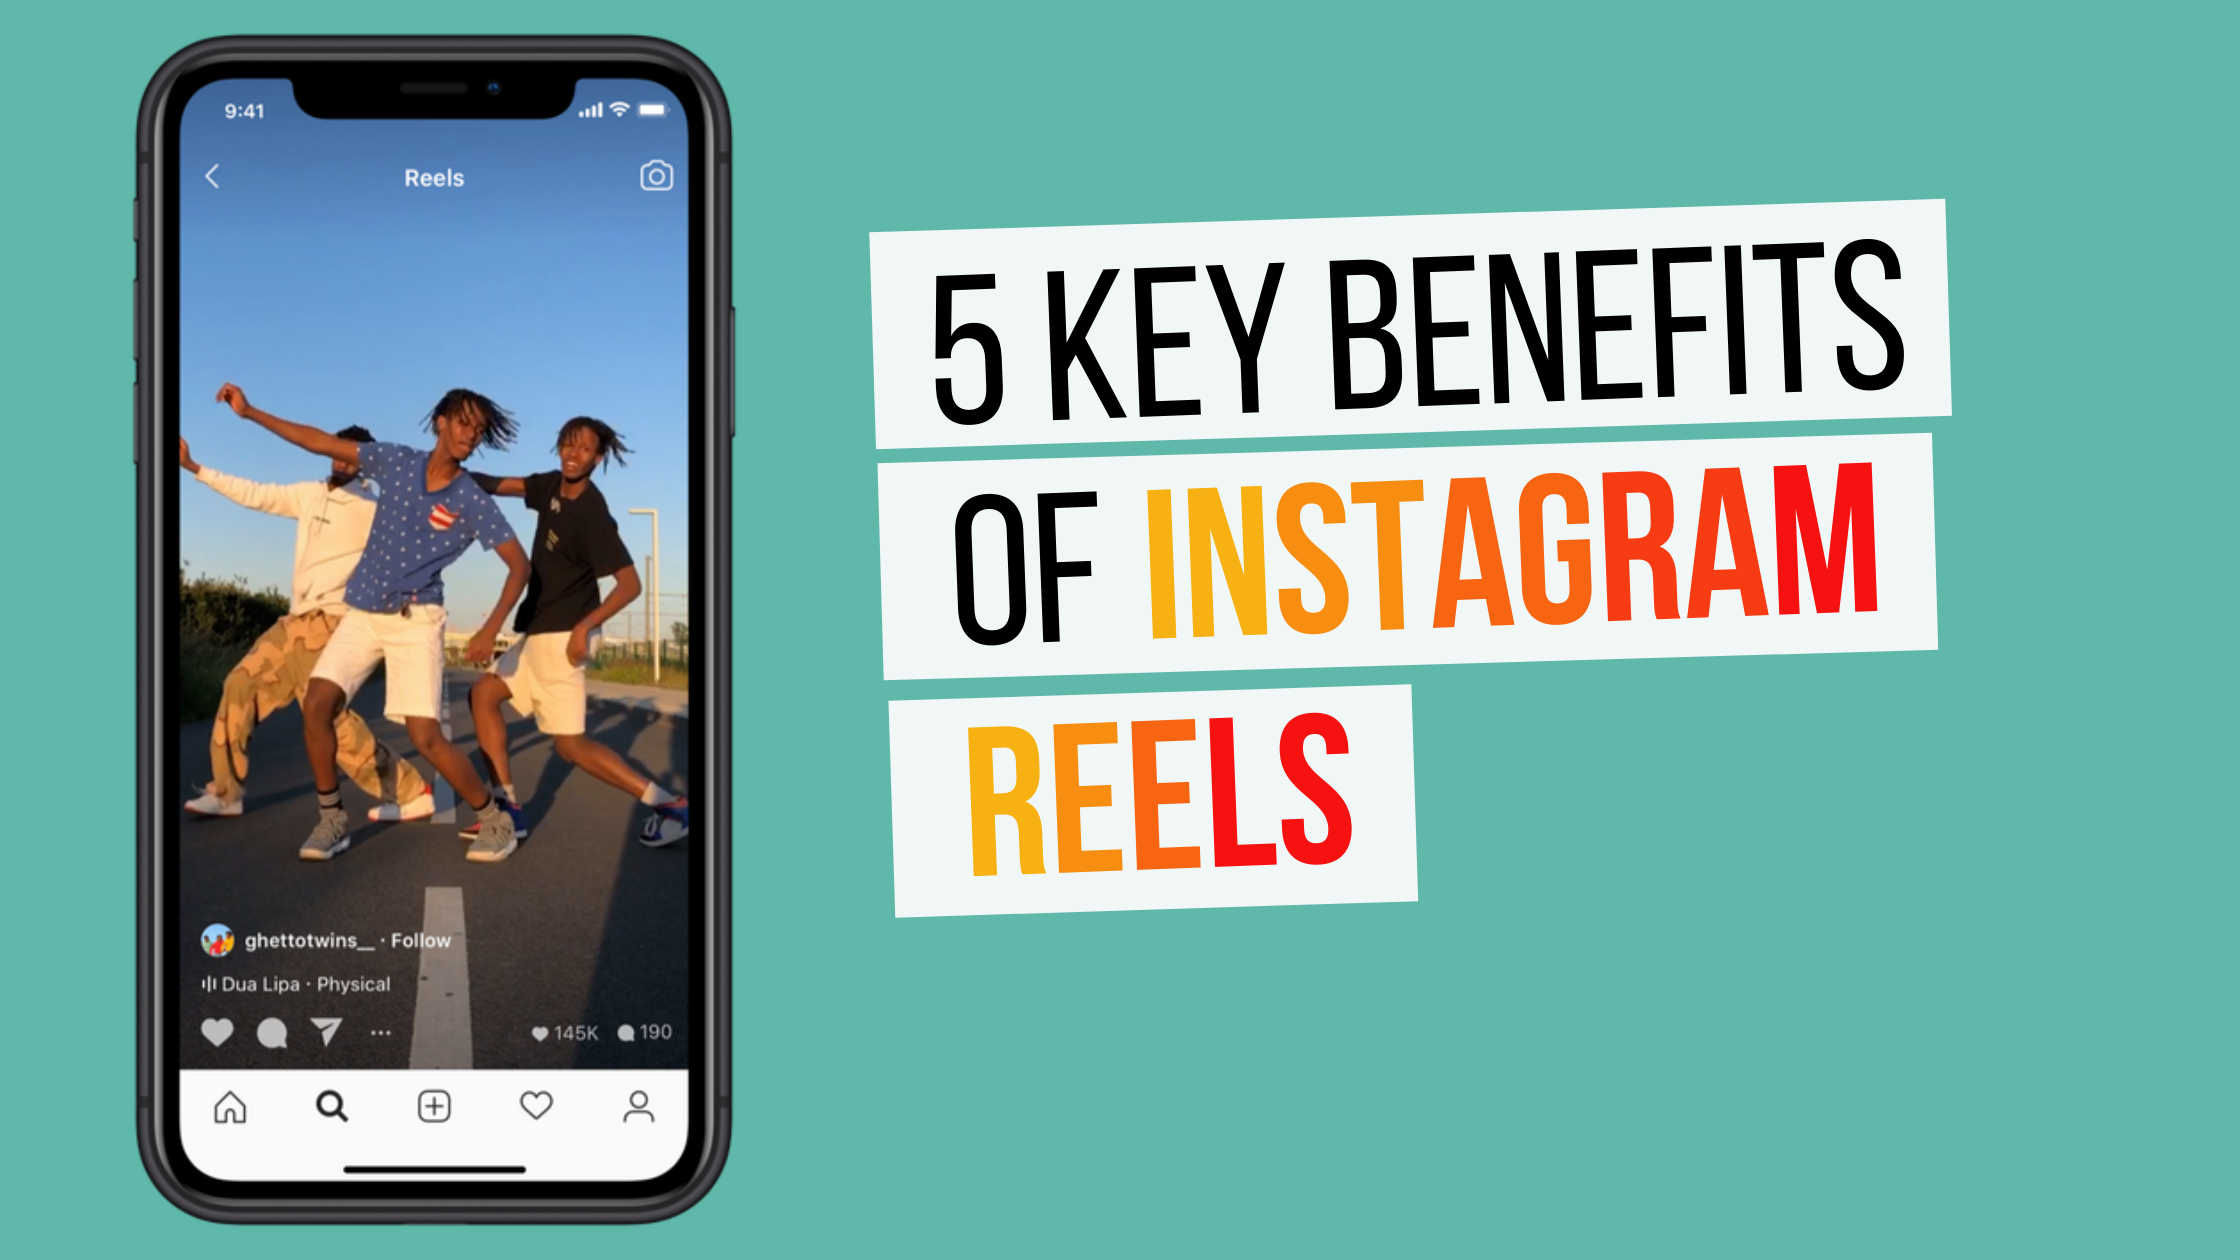 Key 5 key benefits of Instagram Reels.